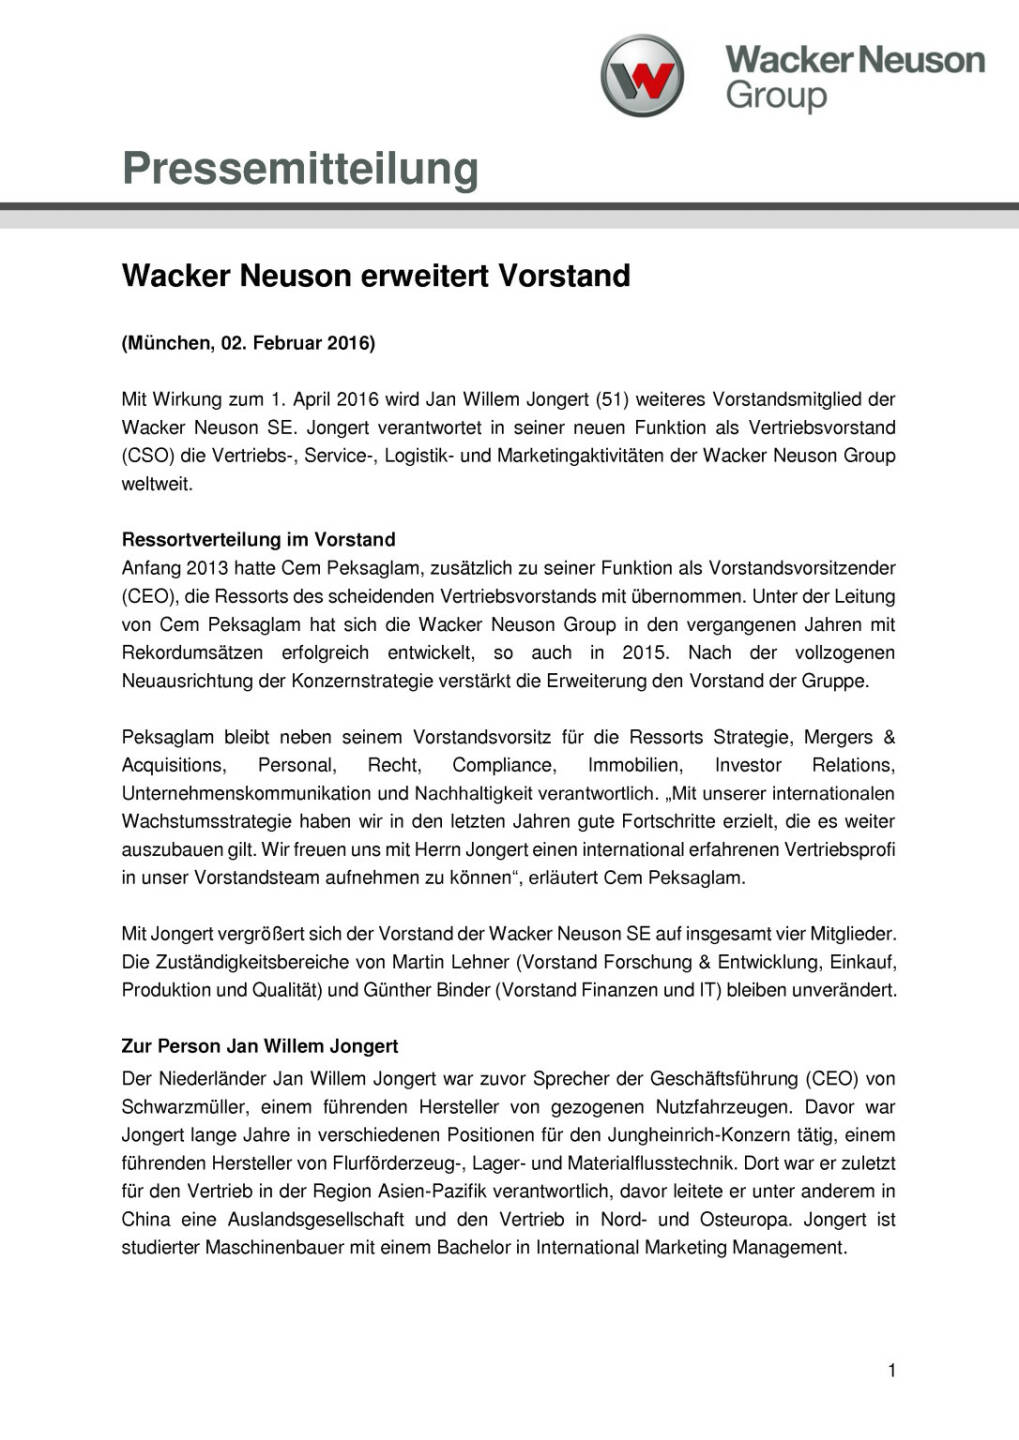 Wacker Neuson erweitert Vorstand, Seite 1/2, komplettes Dokument unter http://boerse-social.com/static/uploads/file_595_wacker_neuson_erweitert_vorstand.pdf